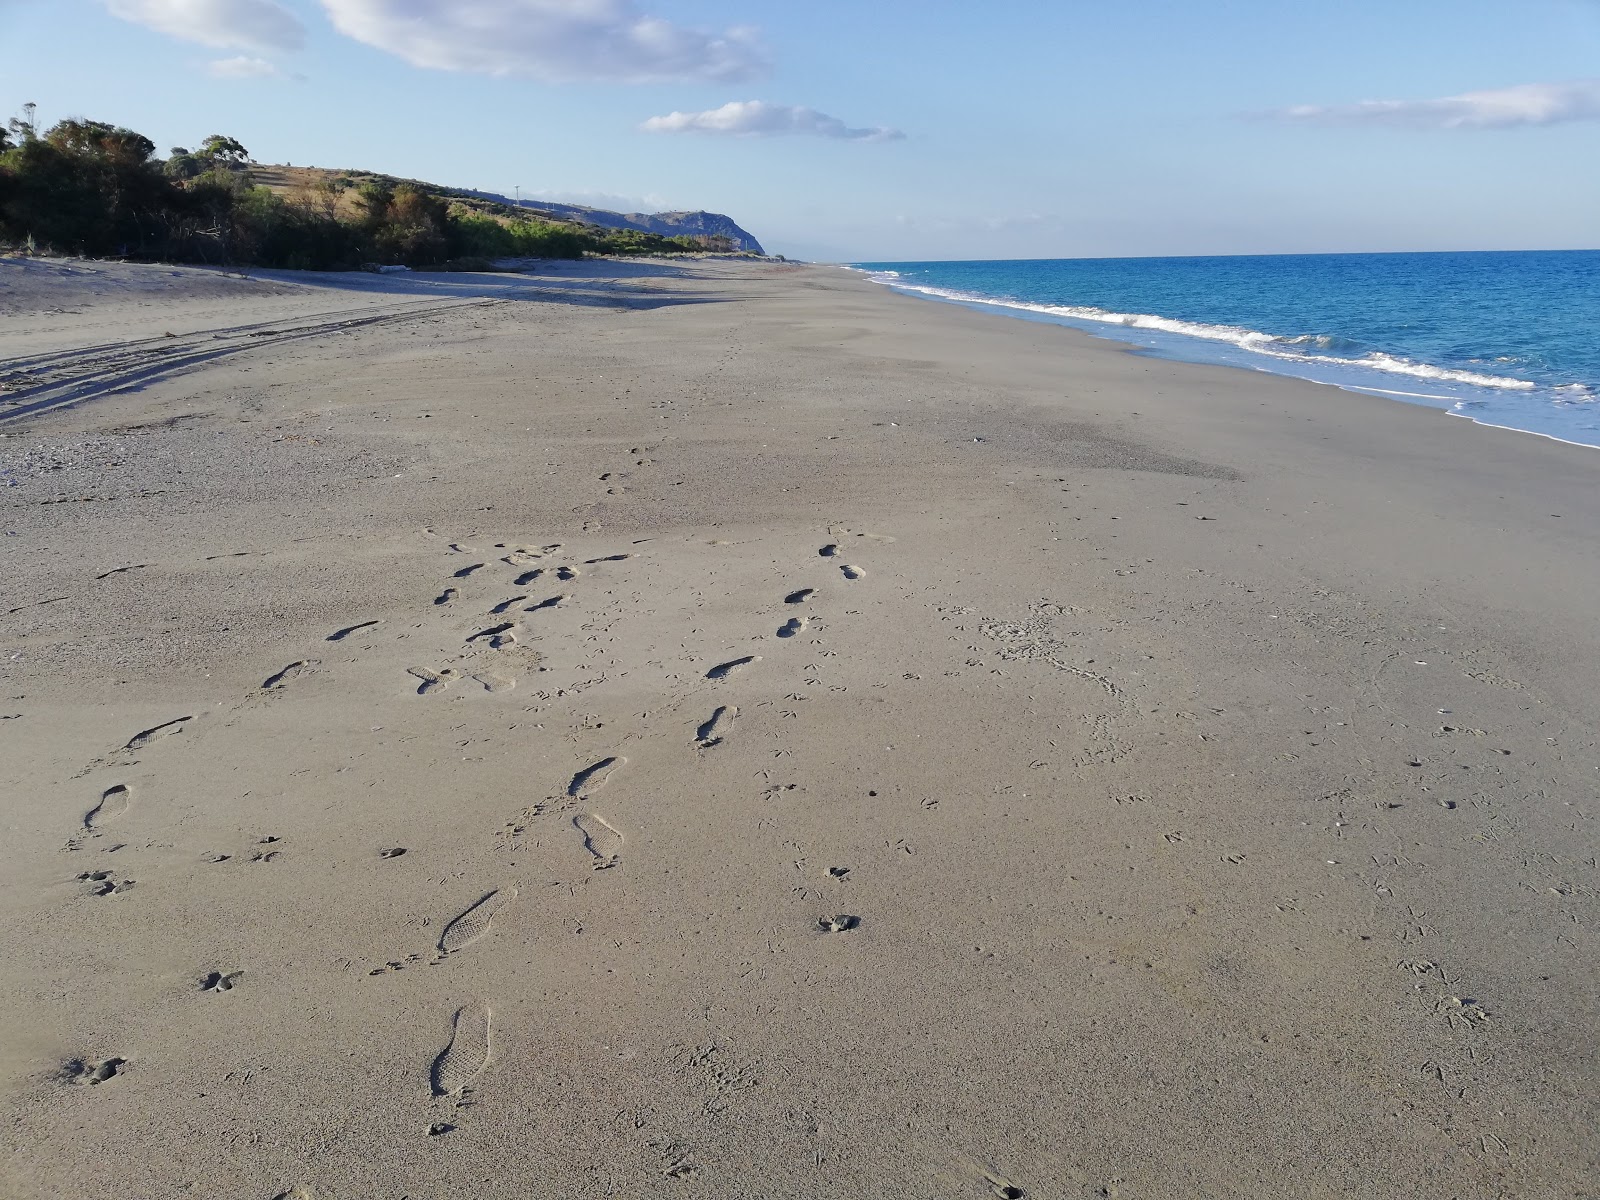 Foto av Spiaggia dello Scoglio Cuzzufri med grå sand yta